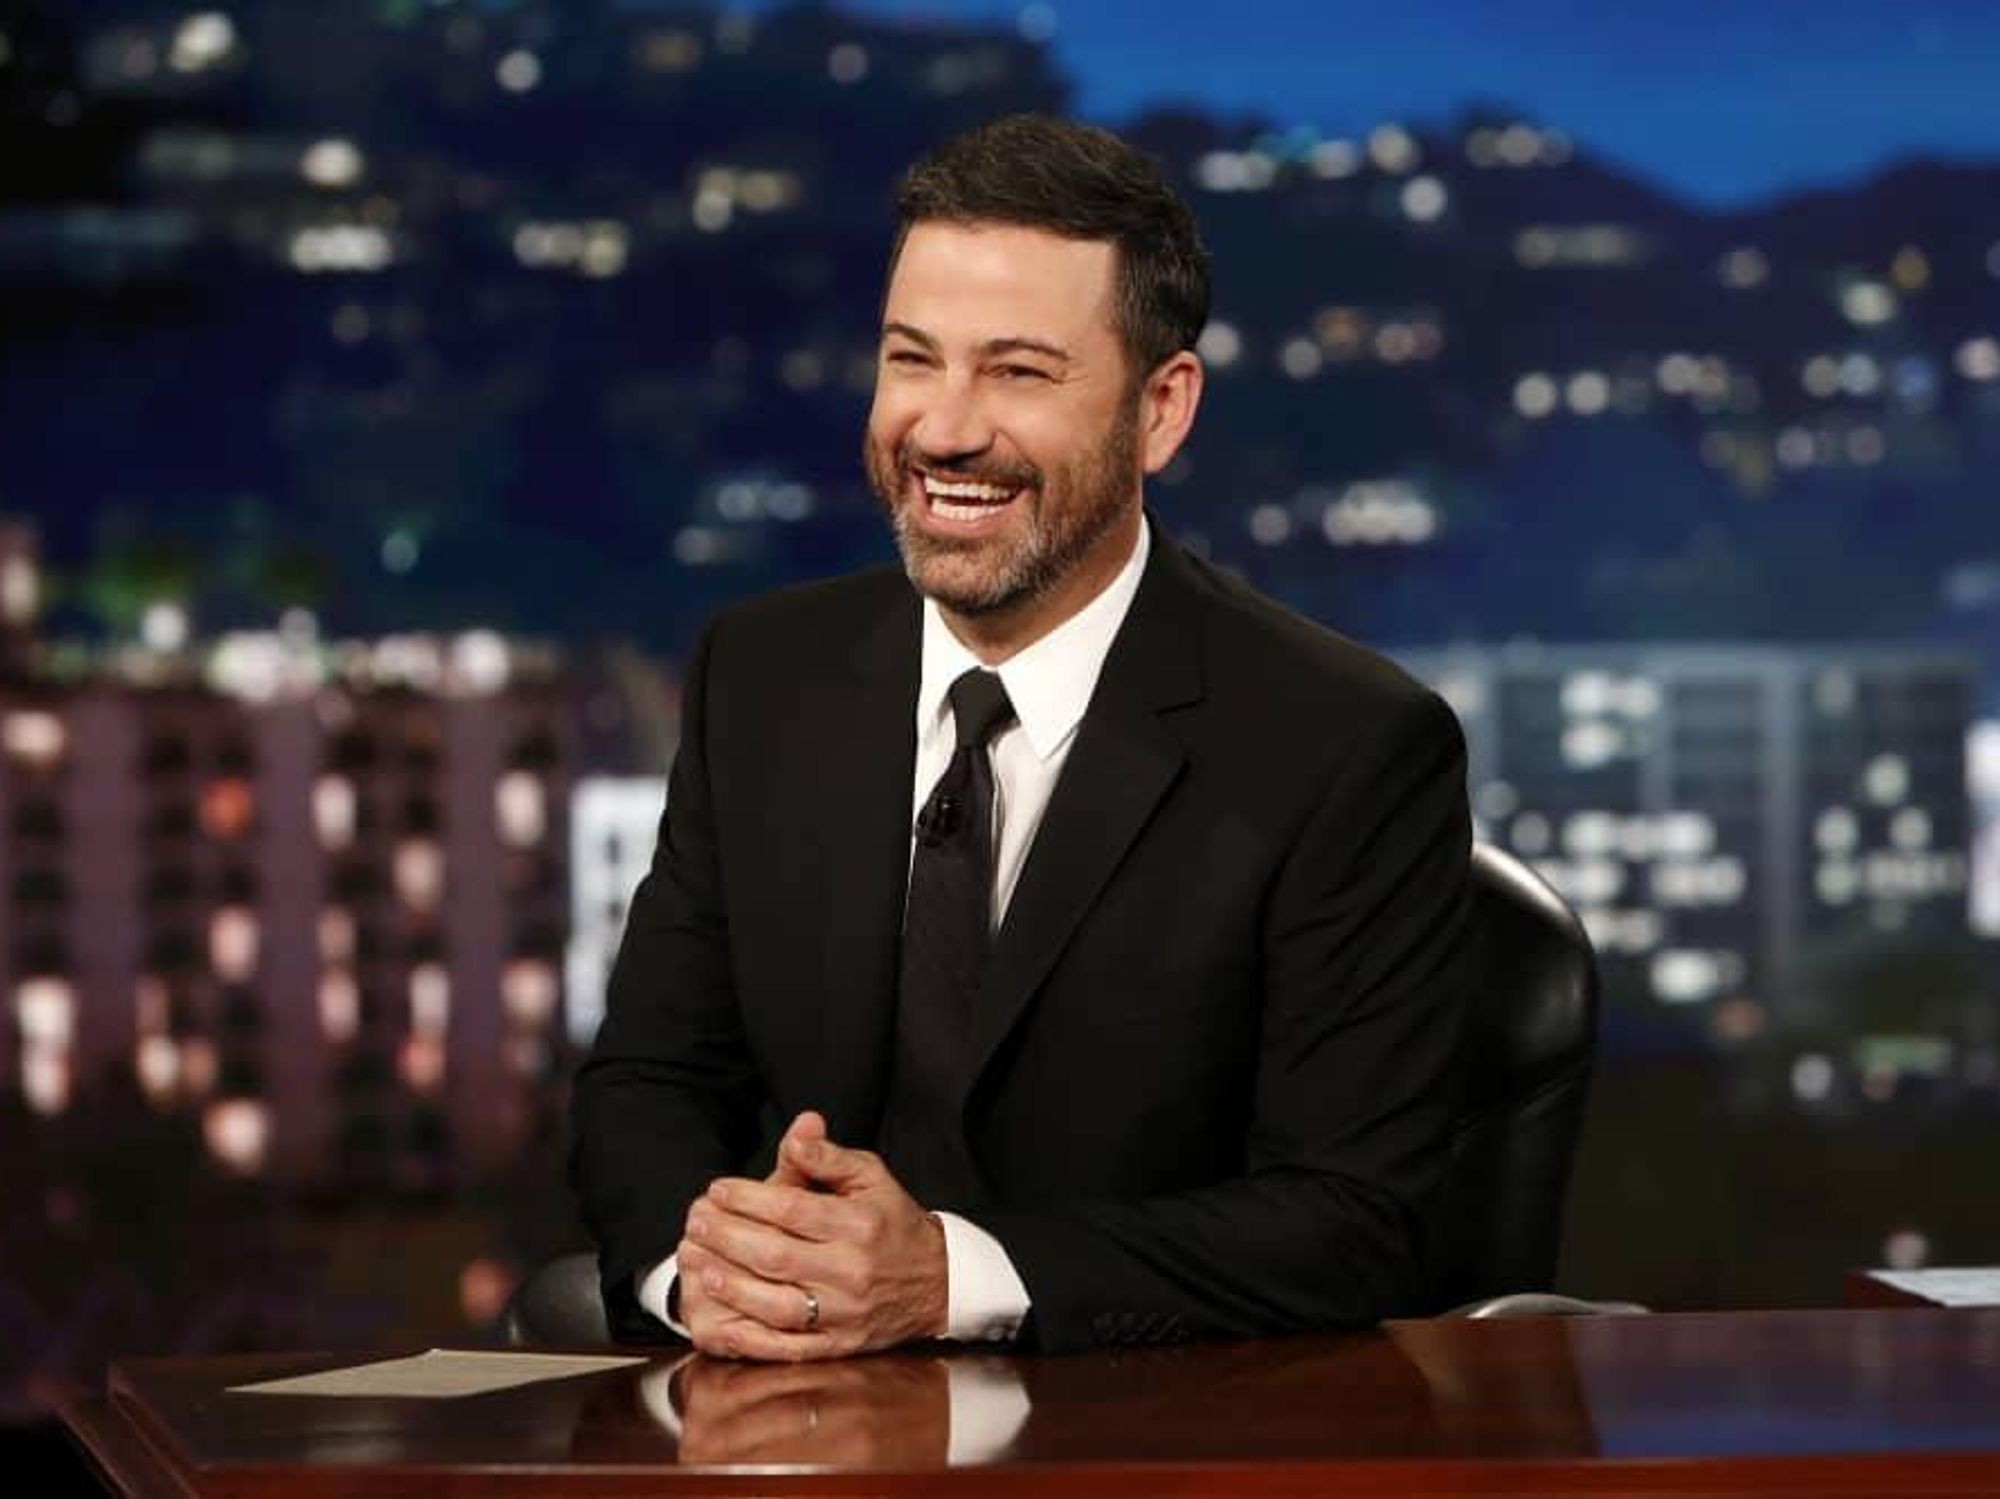 Jimmy Kimmel ABC promo pic